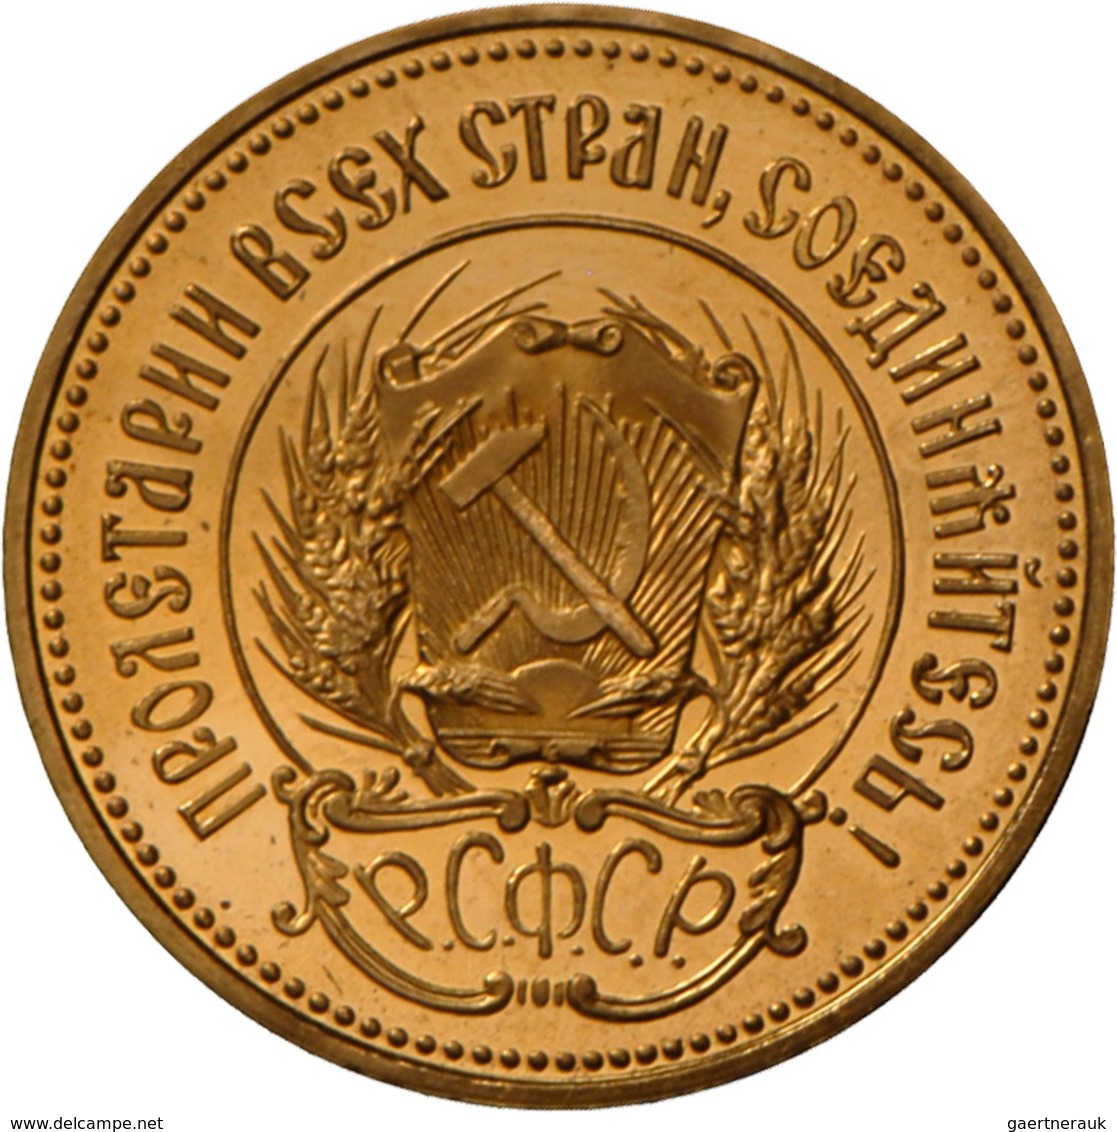 Sowjetunion: 1917-1991:10 Rubel (Tscherwonez) 1980, Moskau. 7,74 G Feingold. Friedberg 181 A; Gold, - Russia